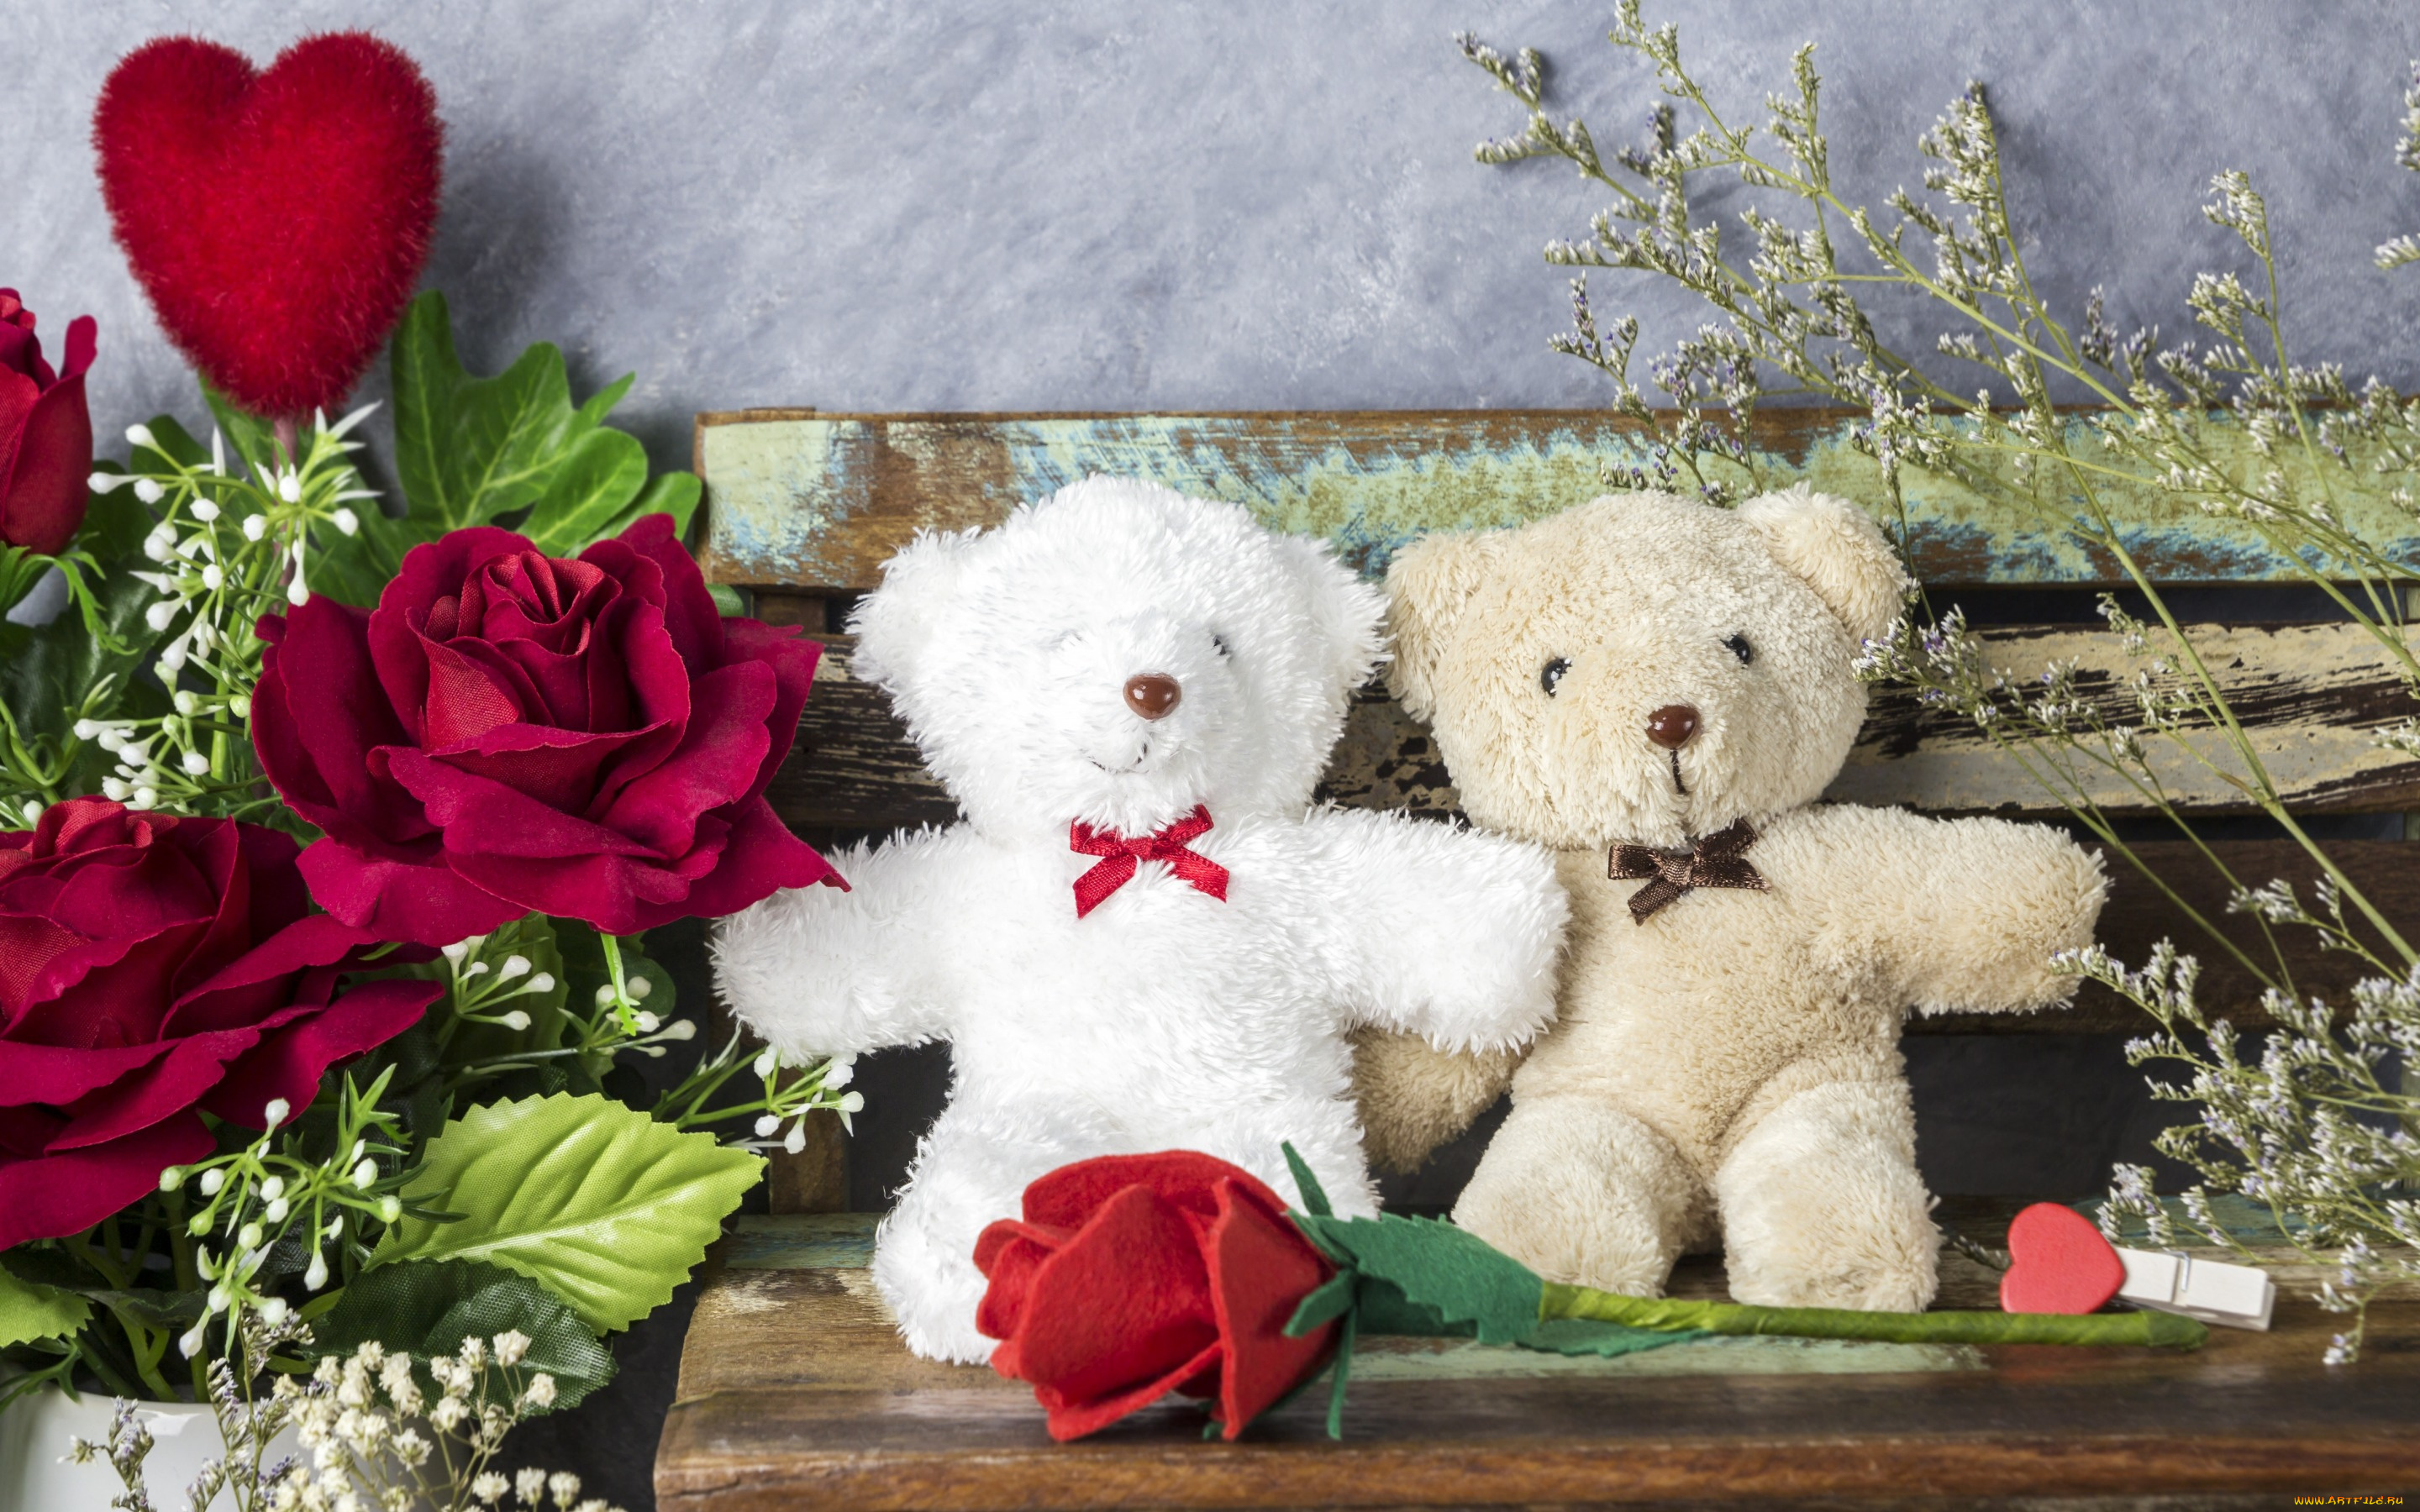 разное, игрушки, valentine's, day, любовь, love, wood, bear, cute, roses, heart, розовые, мишка, цветы, игрушка, red, teddy, flowers, подарок, сердце, gift, romantic, розы